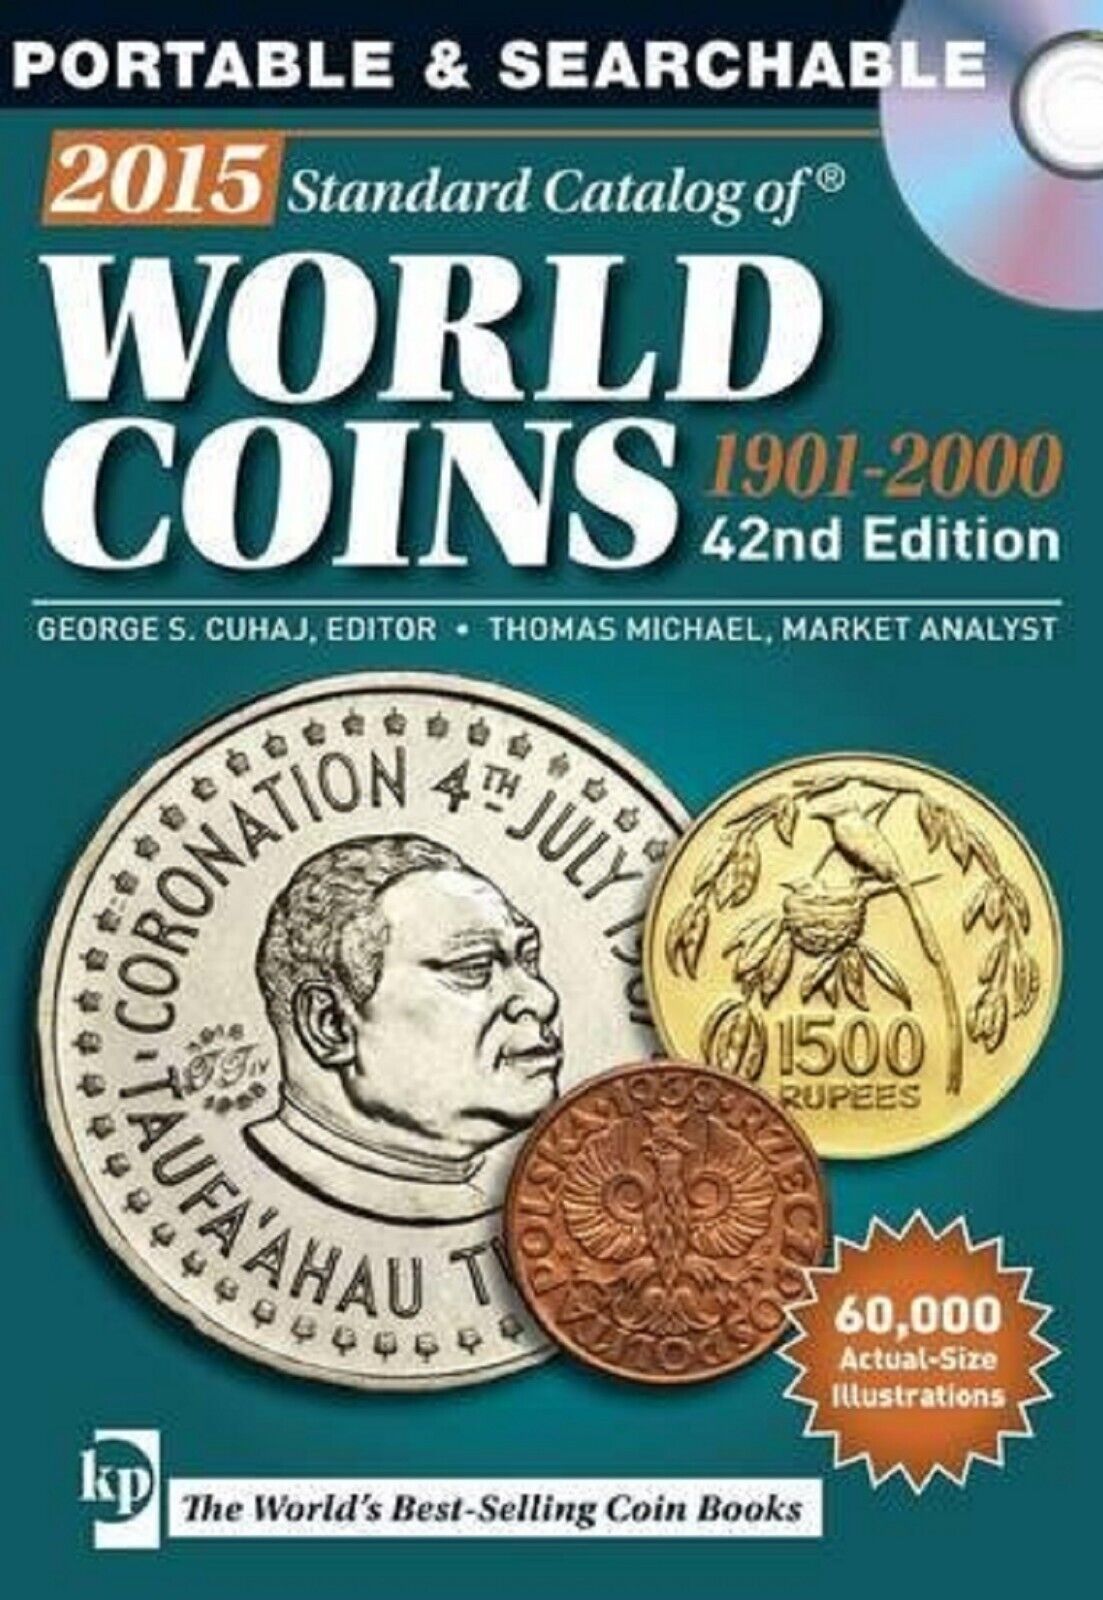 2015 Standard Catalog of World Coins 1901-2000 George S. Cuhaj - 42nd Edition CD